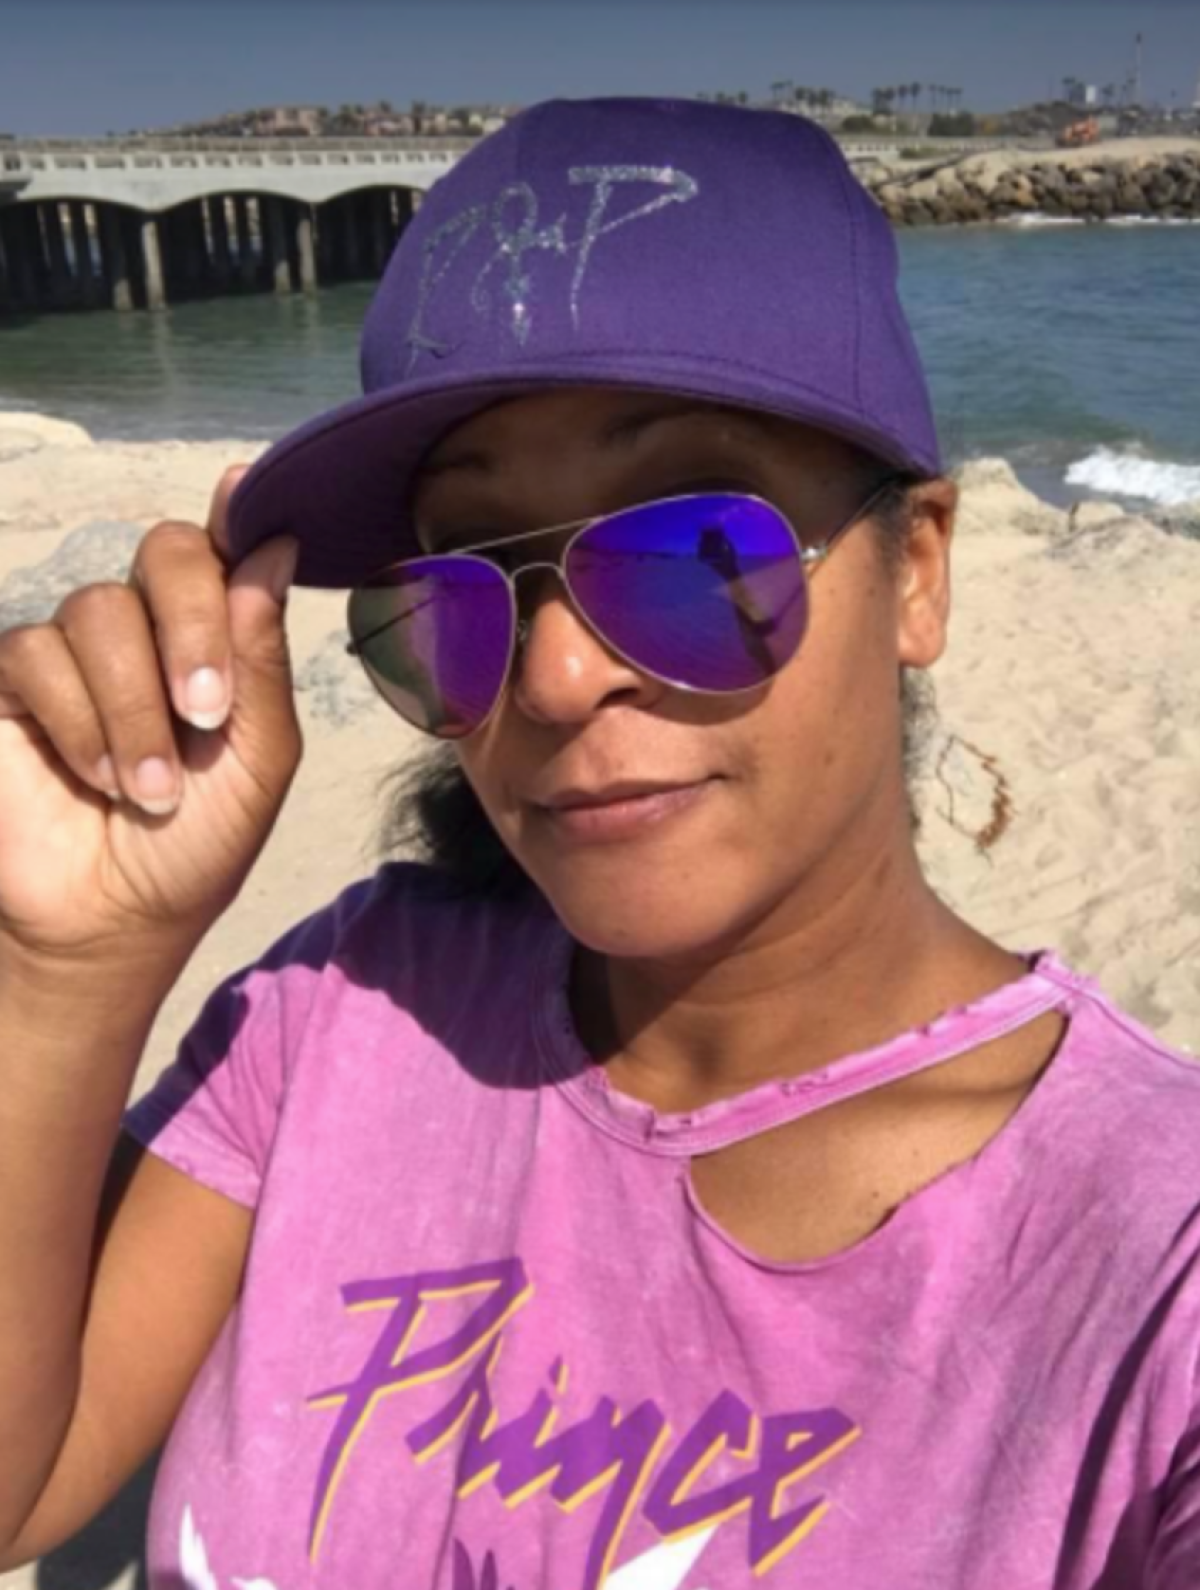 Woman wears purple Prince apparel and purple sunglasses on the beach 